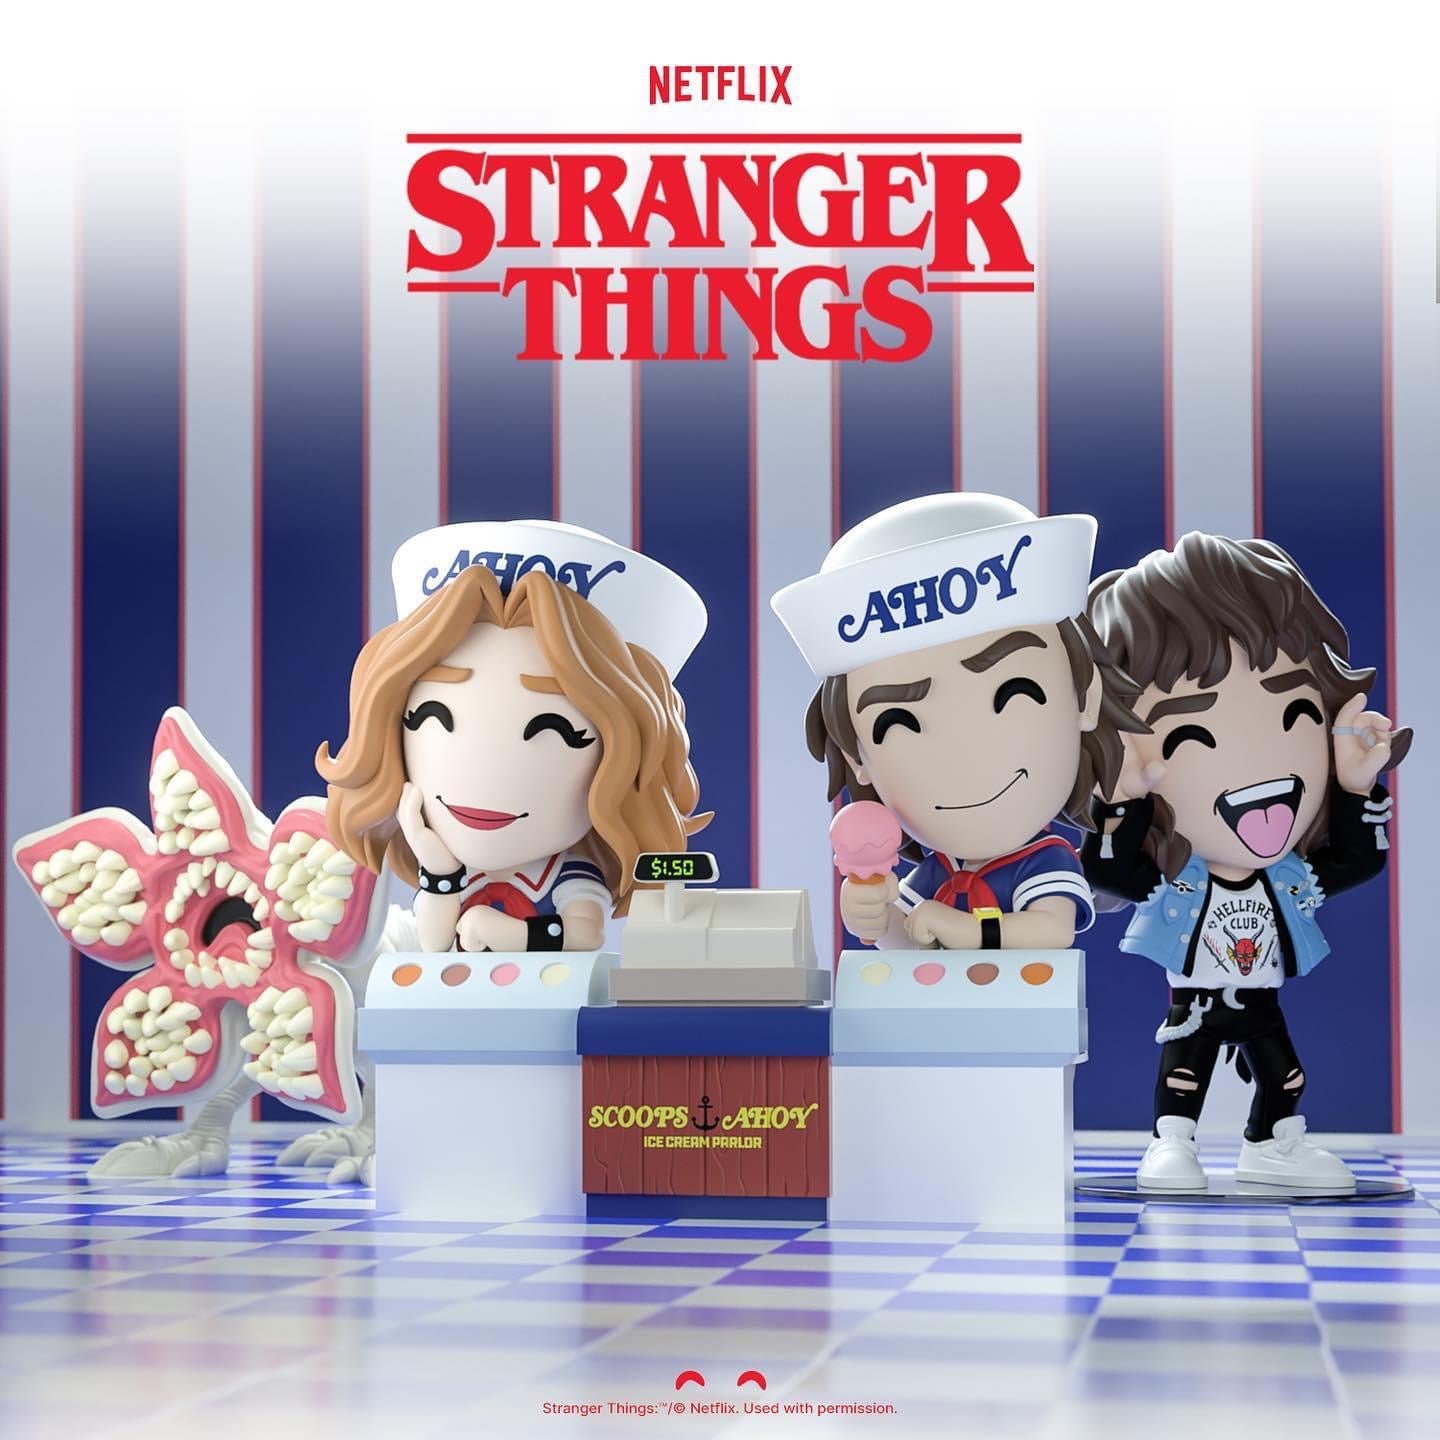 Stranger Things Vinyl figurine Scoops Ahoy Scoops Ahoy Youtooz Netflix